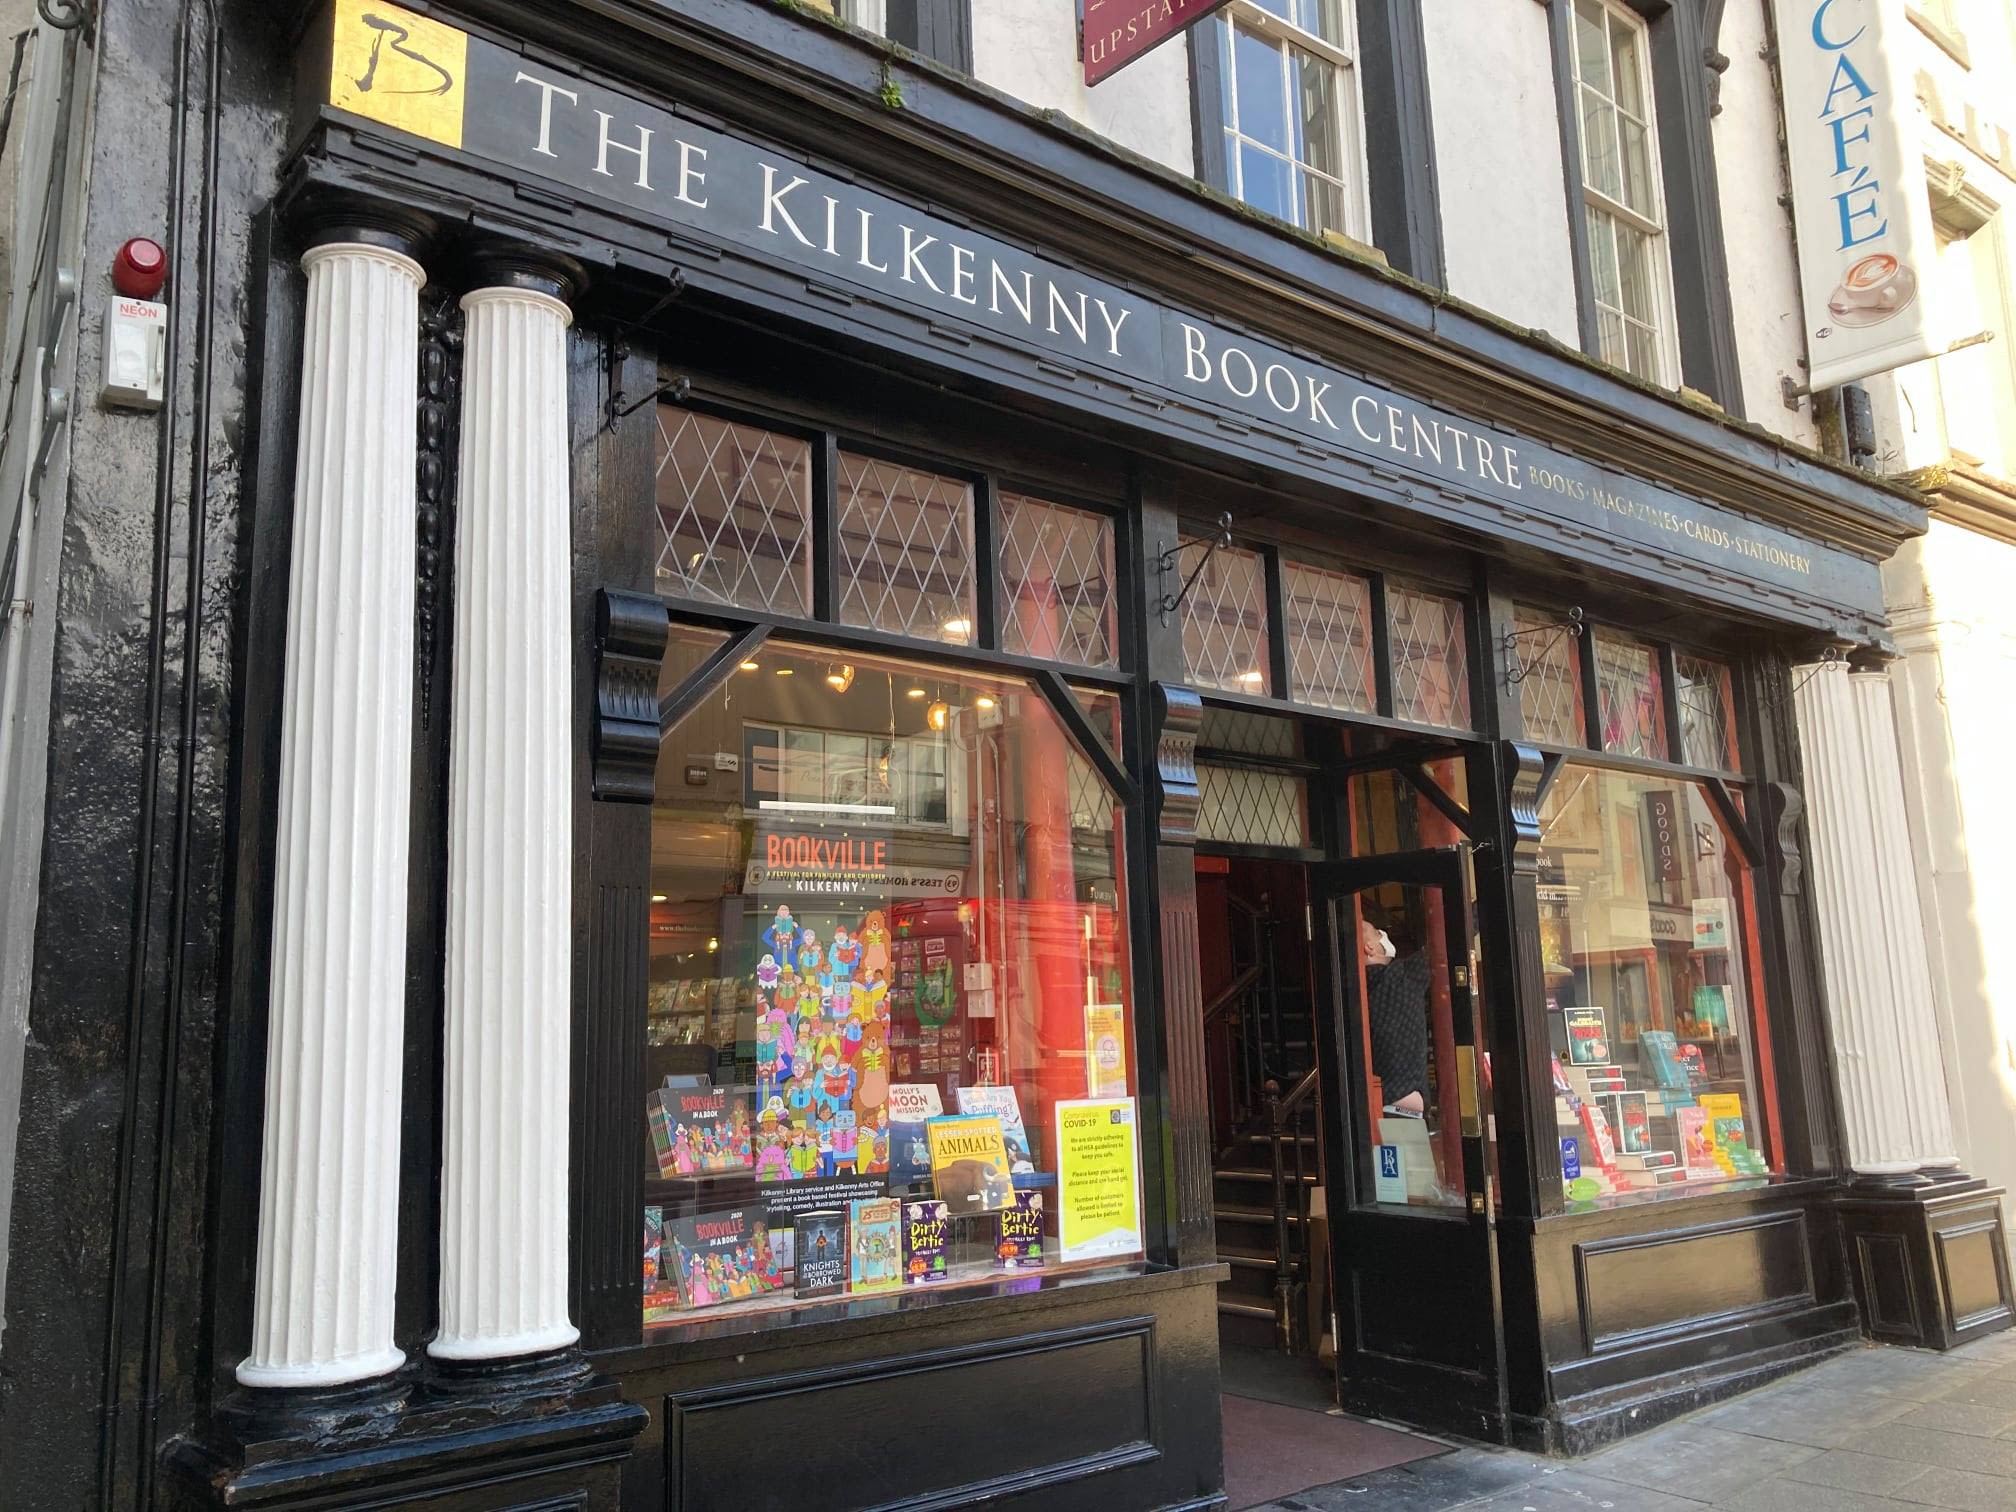 The Kilkenny Book Centre